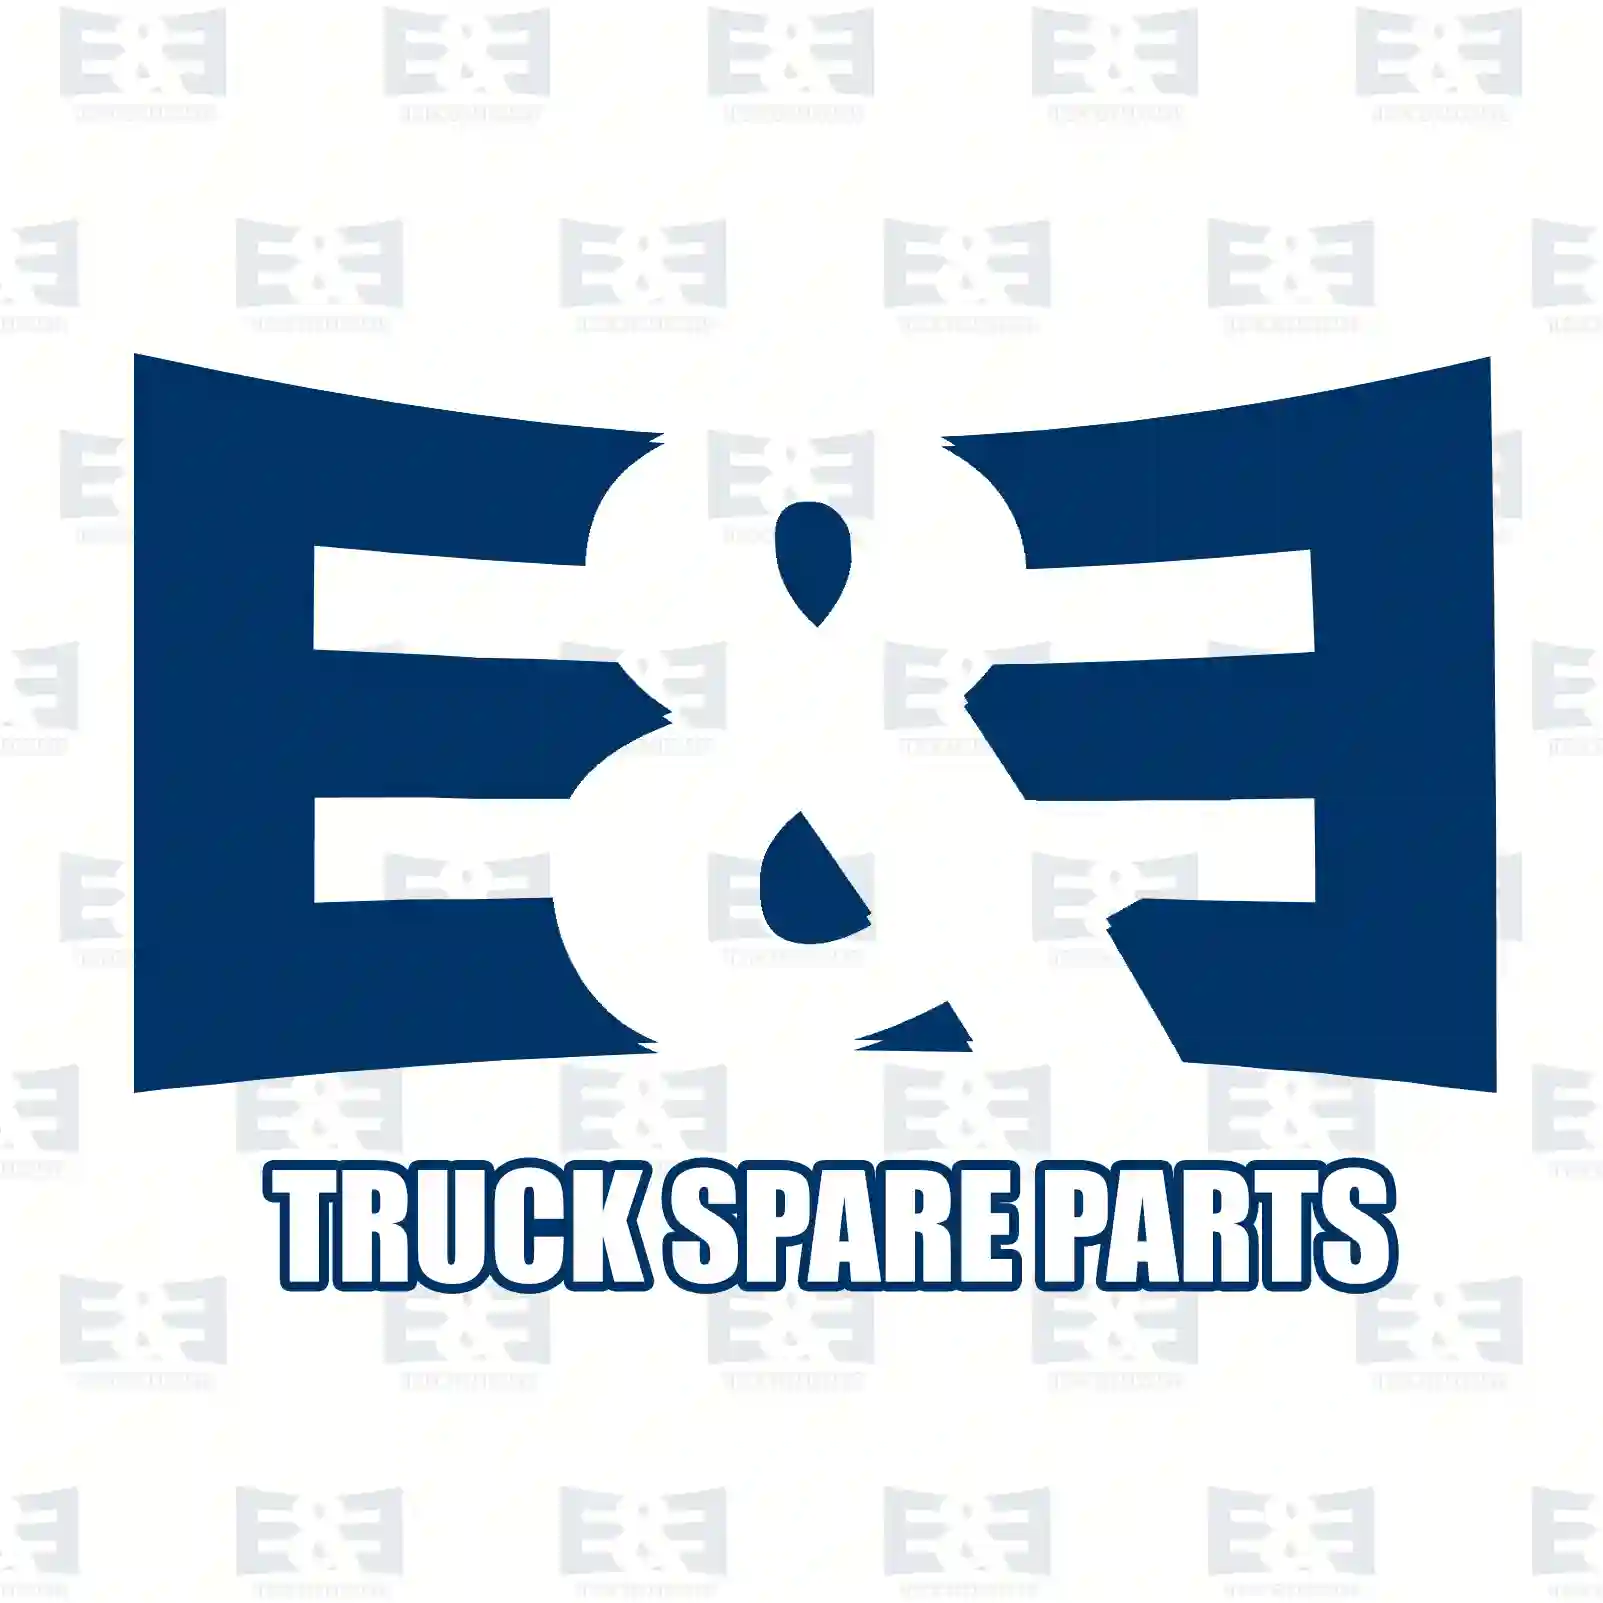 Spring bushing, 2E2281955, 08138899, 8138899, ZG41750-0008 ||  2E2281955 E&E Truck Spare Parts | Truck Spare Parts, Auotomotive Spare Parts Spring bushing, 2E2281955, 08138899, 8138899, ZG41750-0008 ||  2E2281955 E&E Truck Spare Parts | Truck Spare Parts, Auotomotive Spare Parts